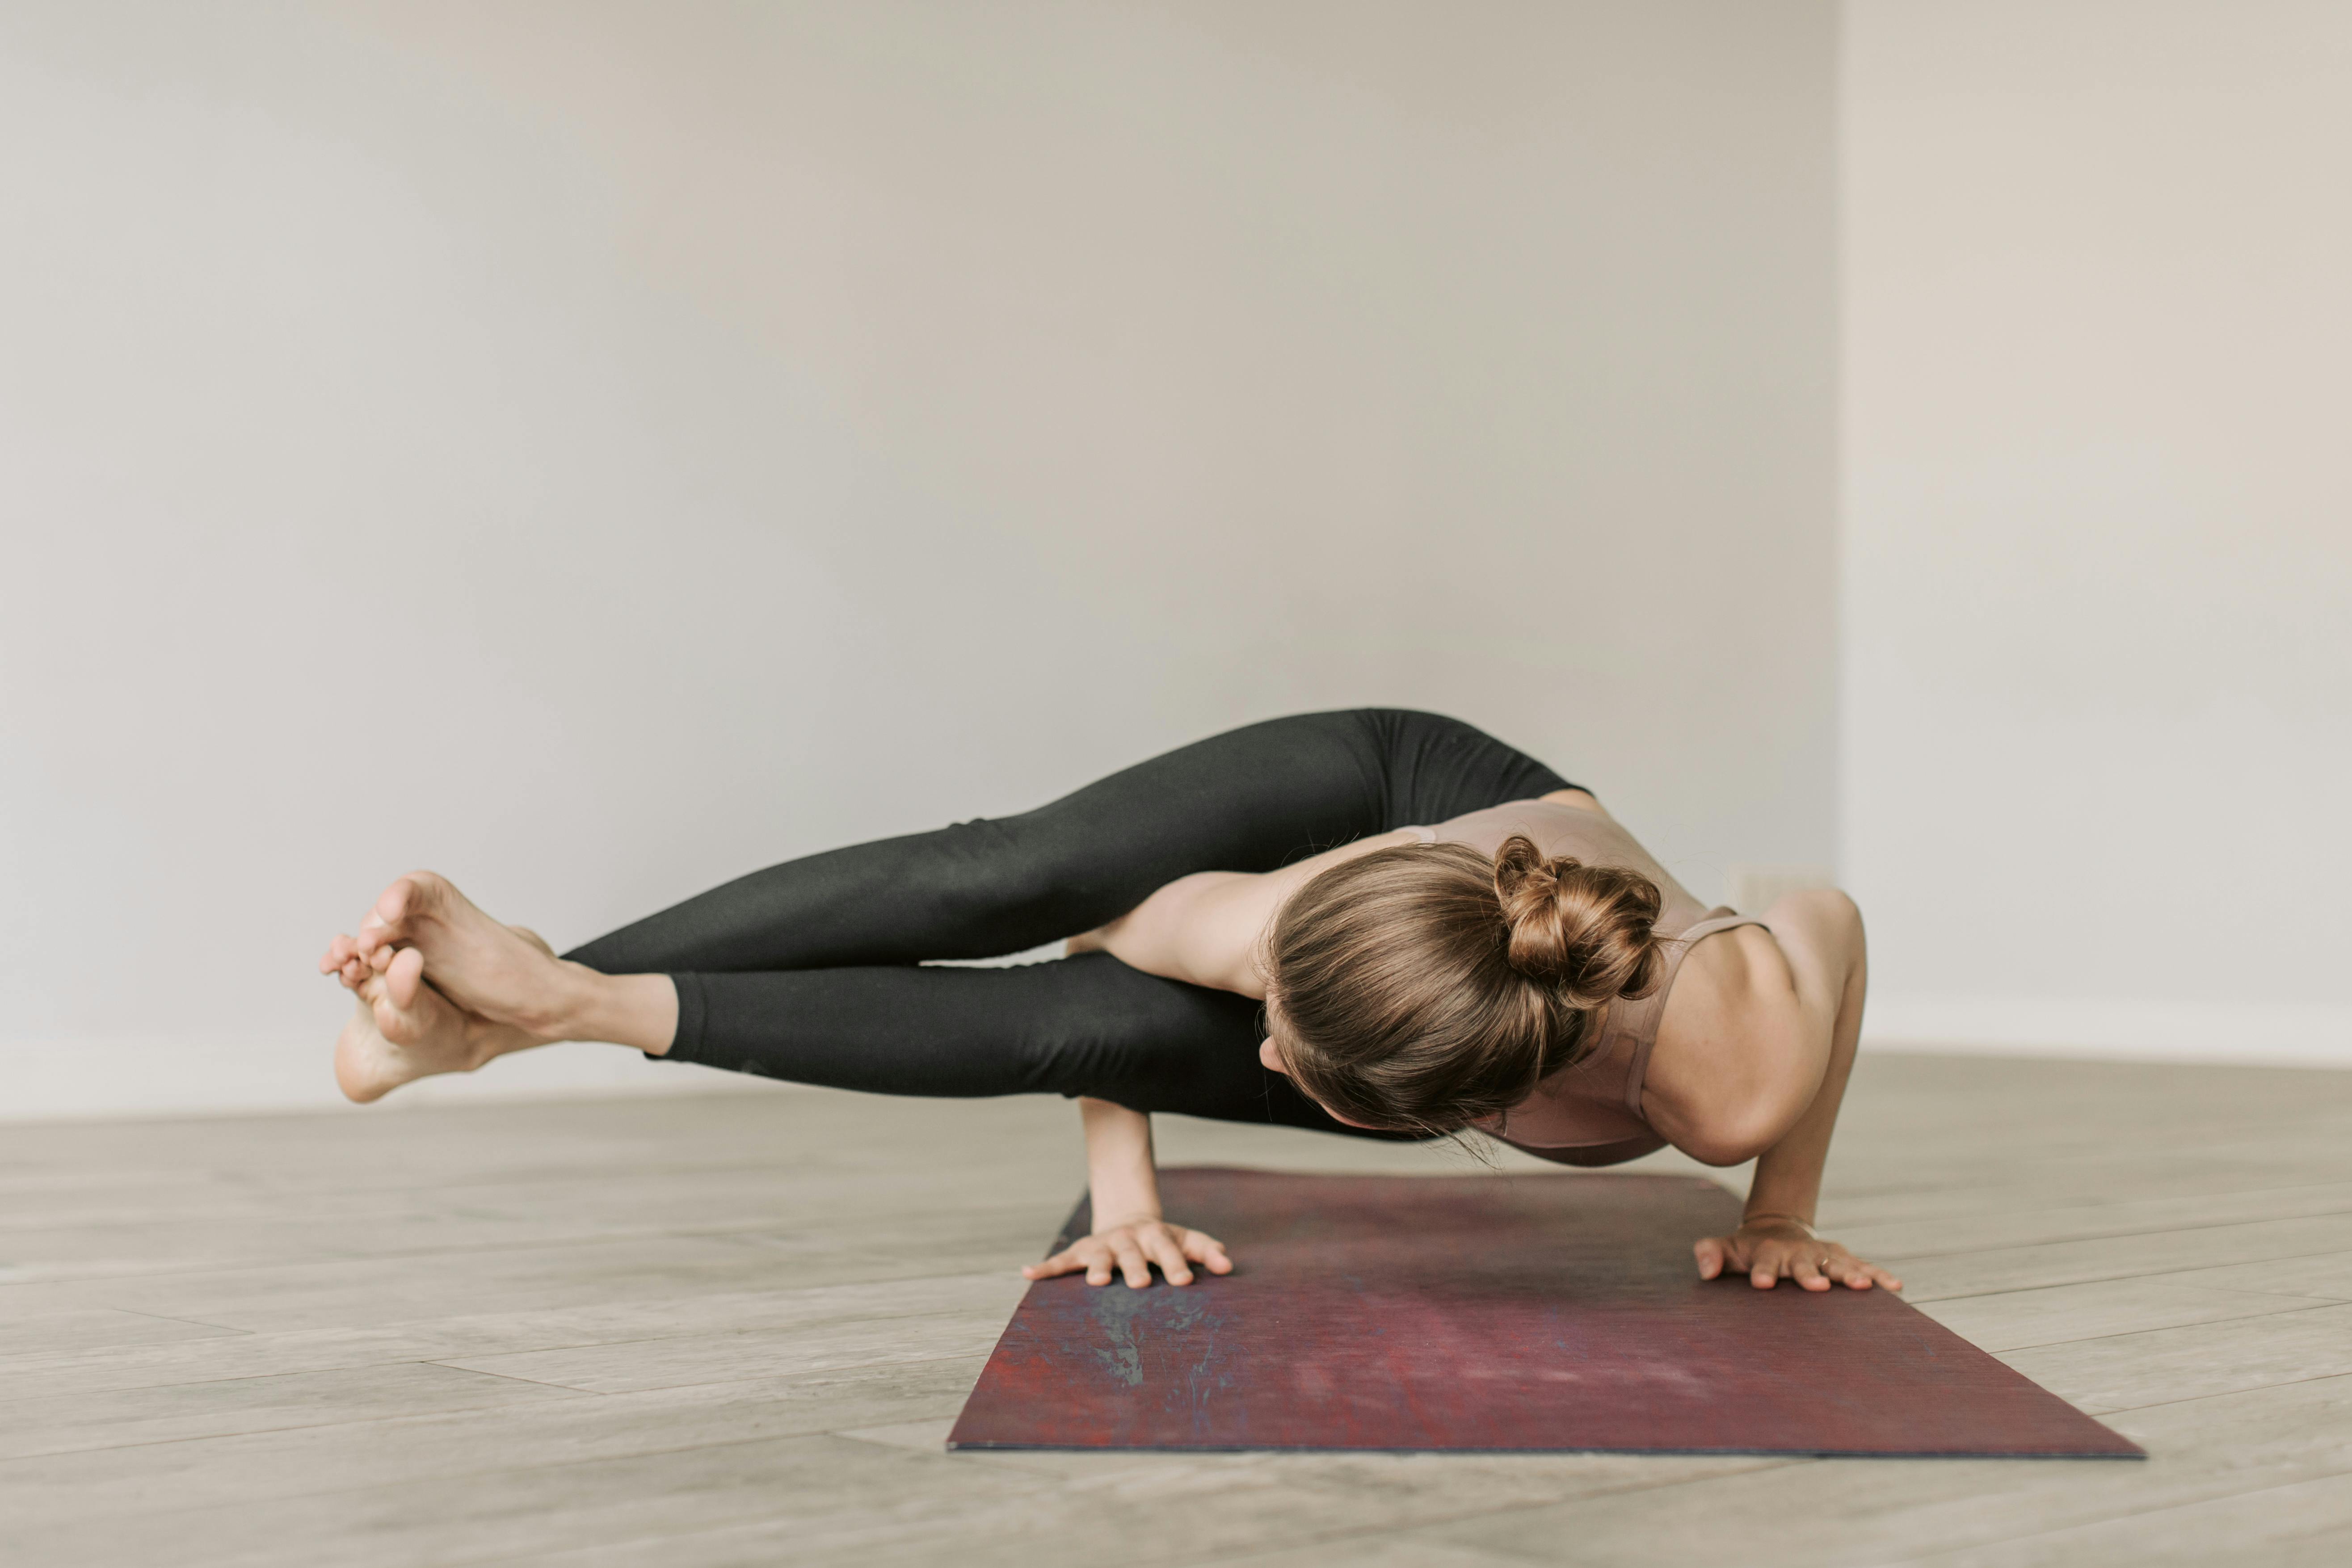 Bird of paradise yoga pose tutorial | Online yoga class